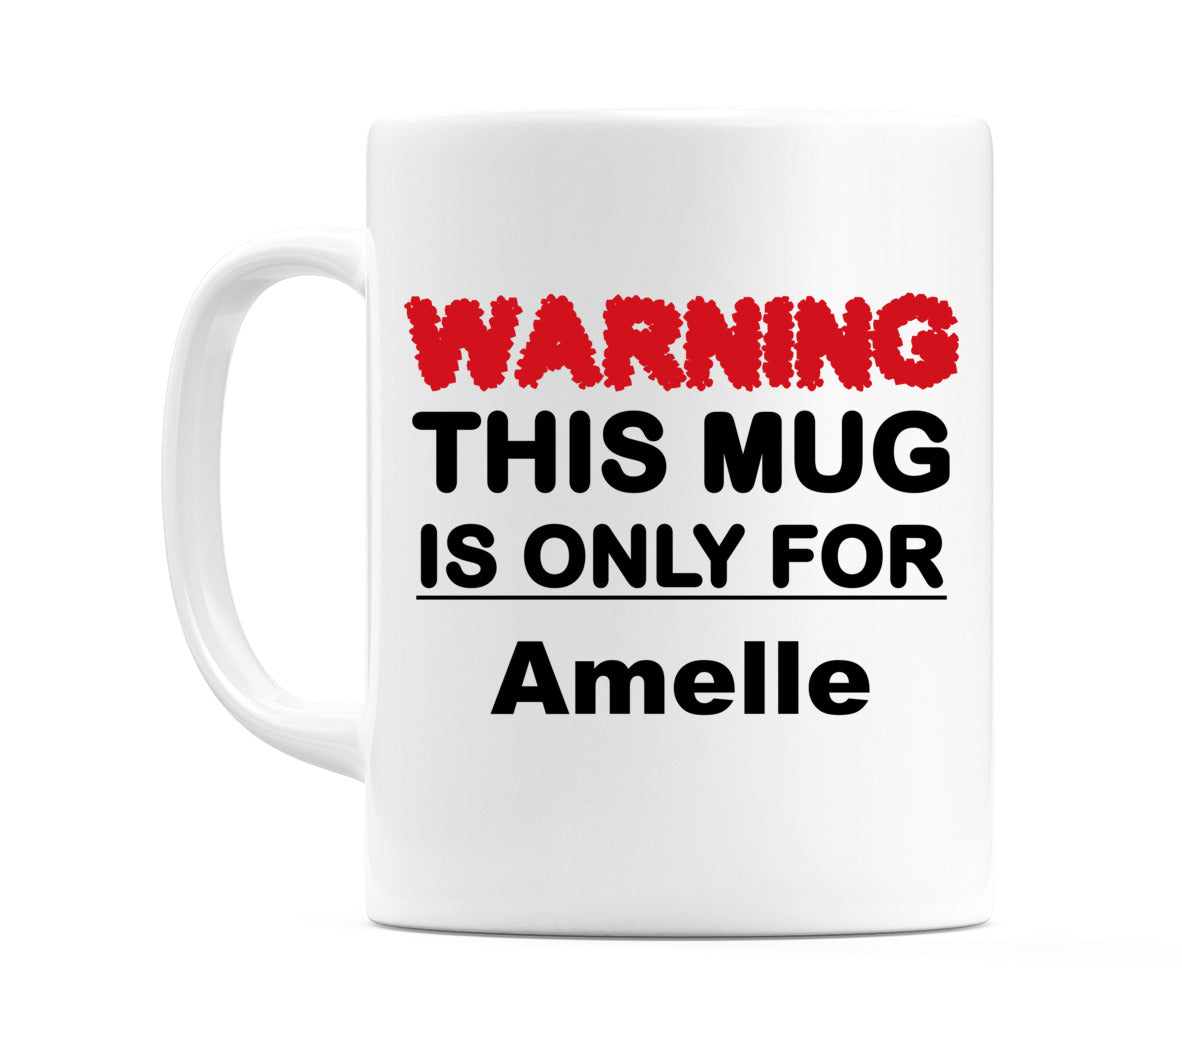 Warning This Mug is ONLY for Amelle Mug